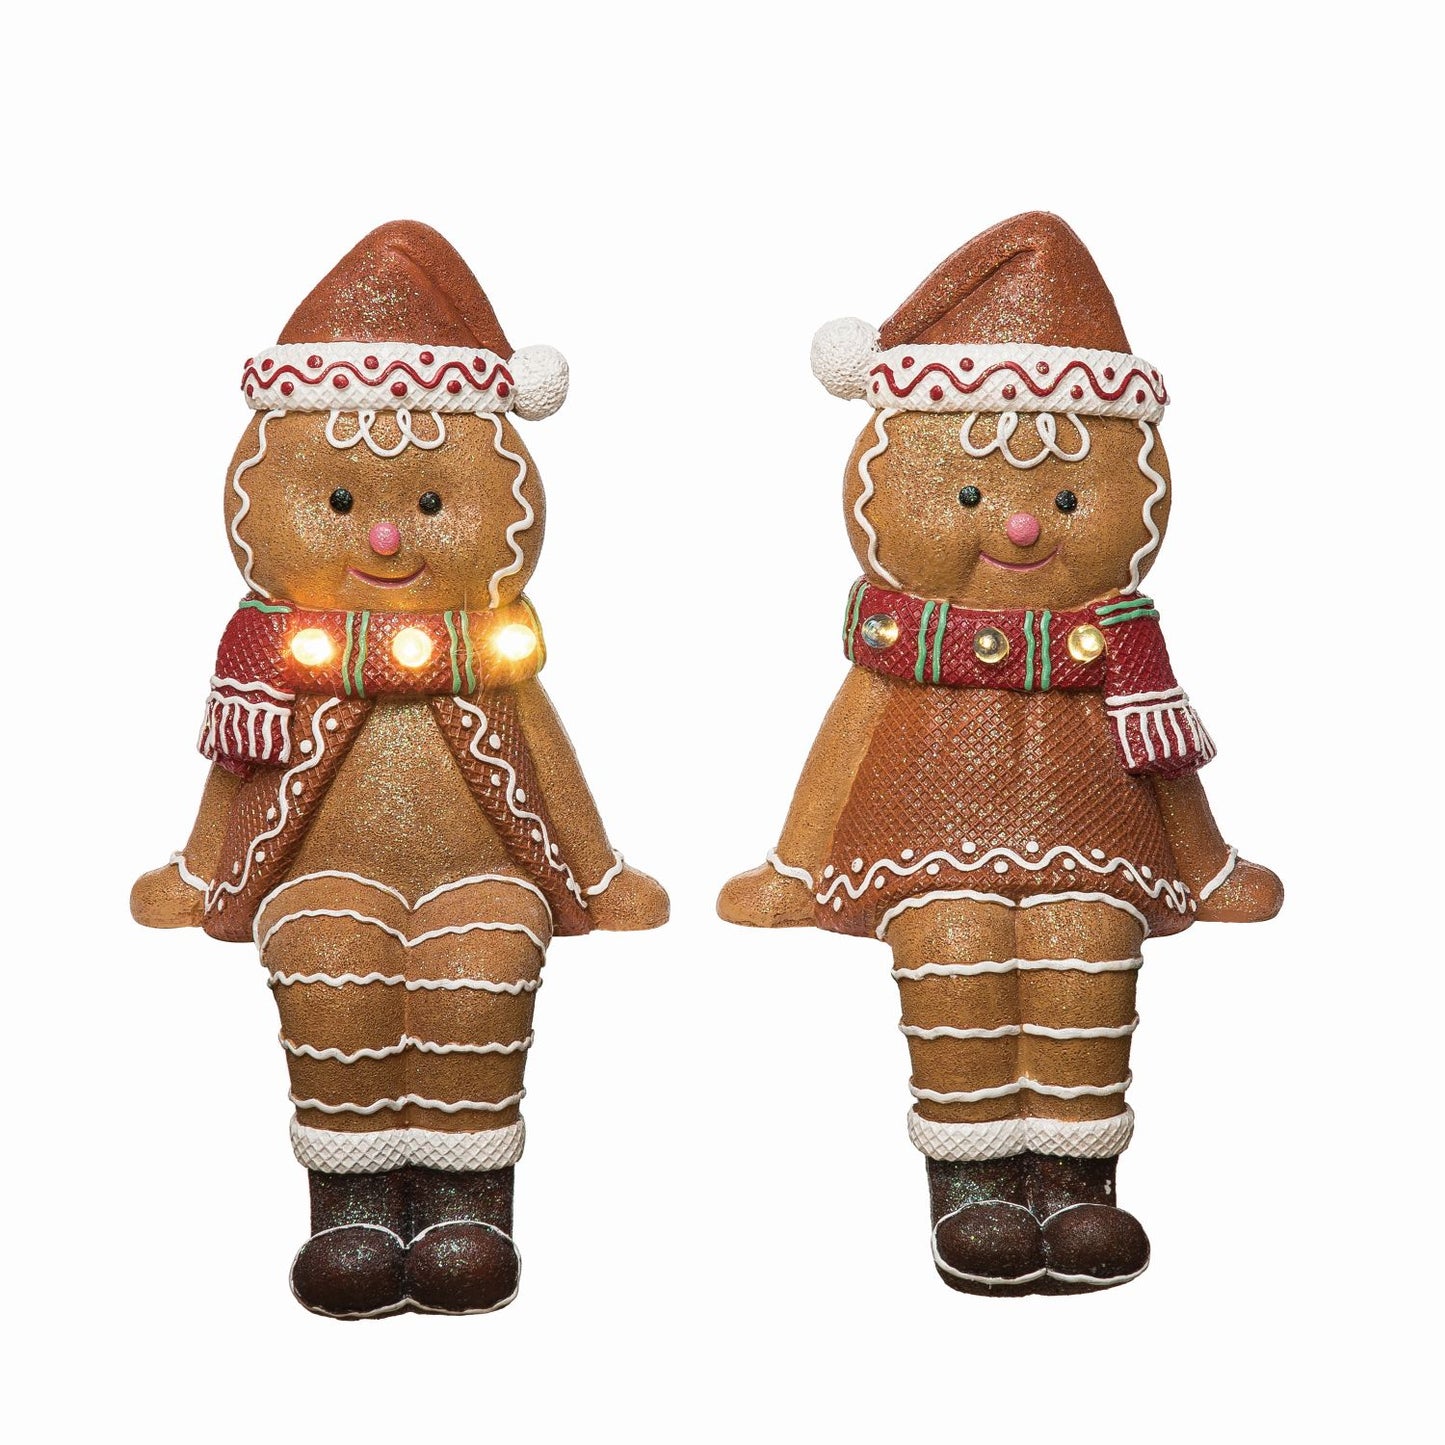 Transpac Resin Light Up Gingerbread Sitter Figurine, Set Of 2, Assortment